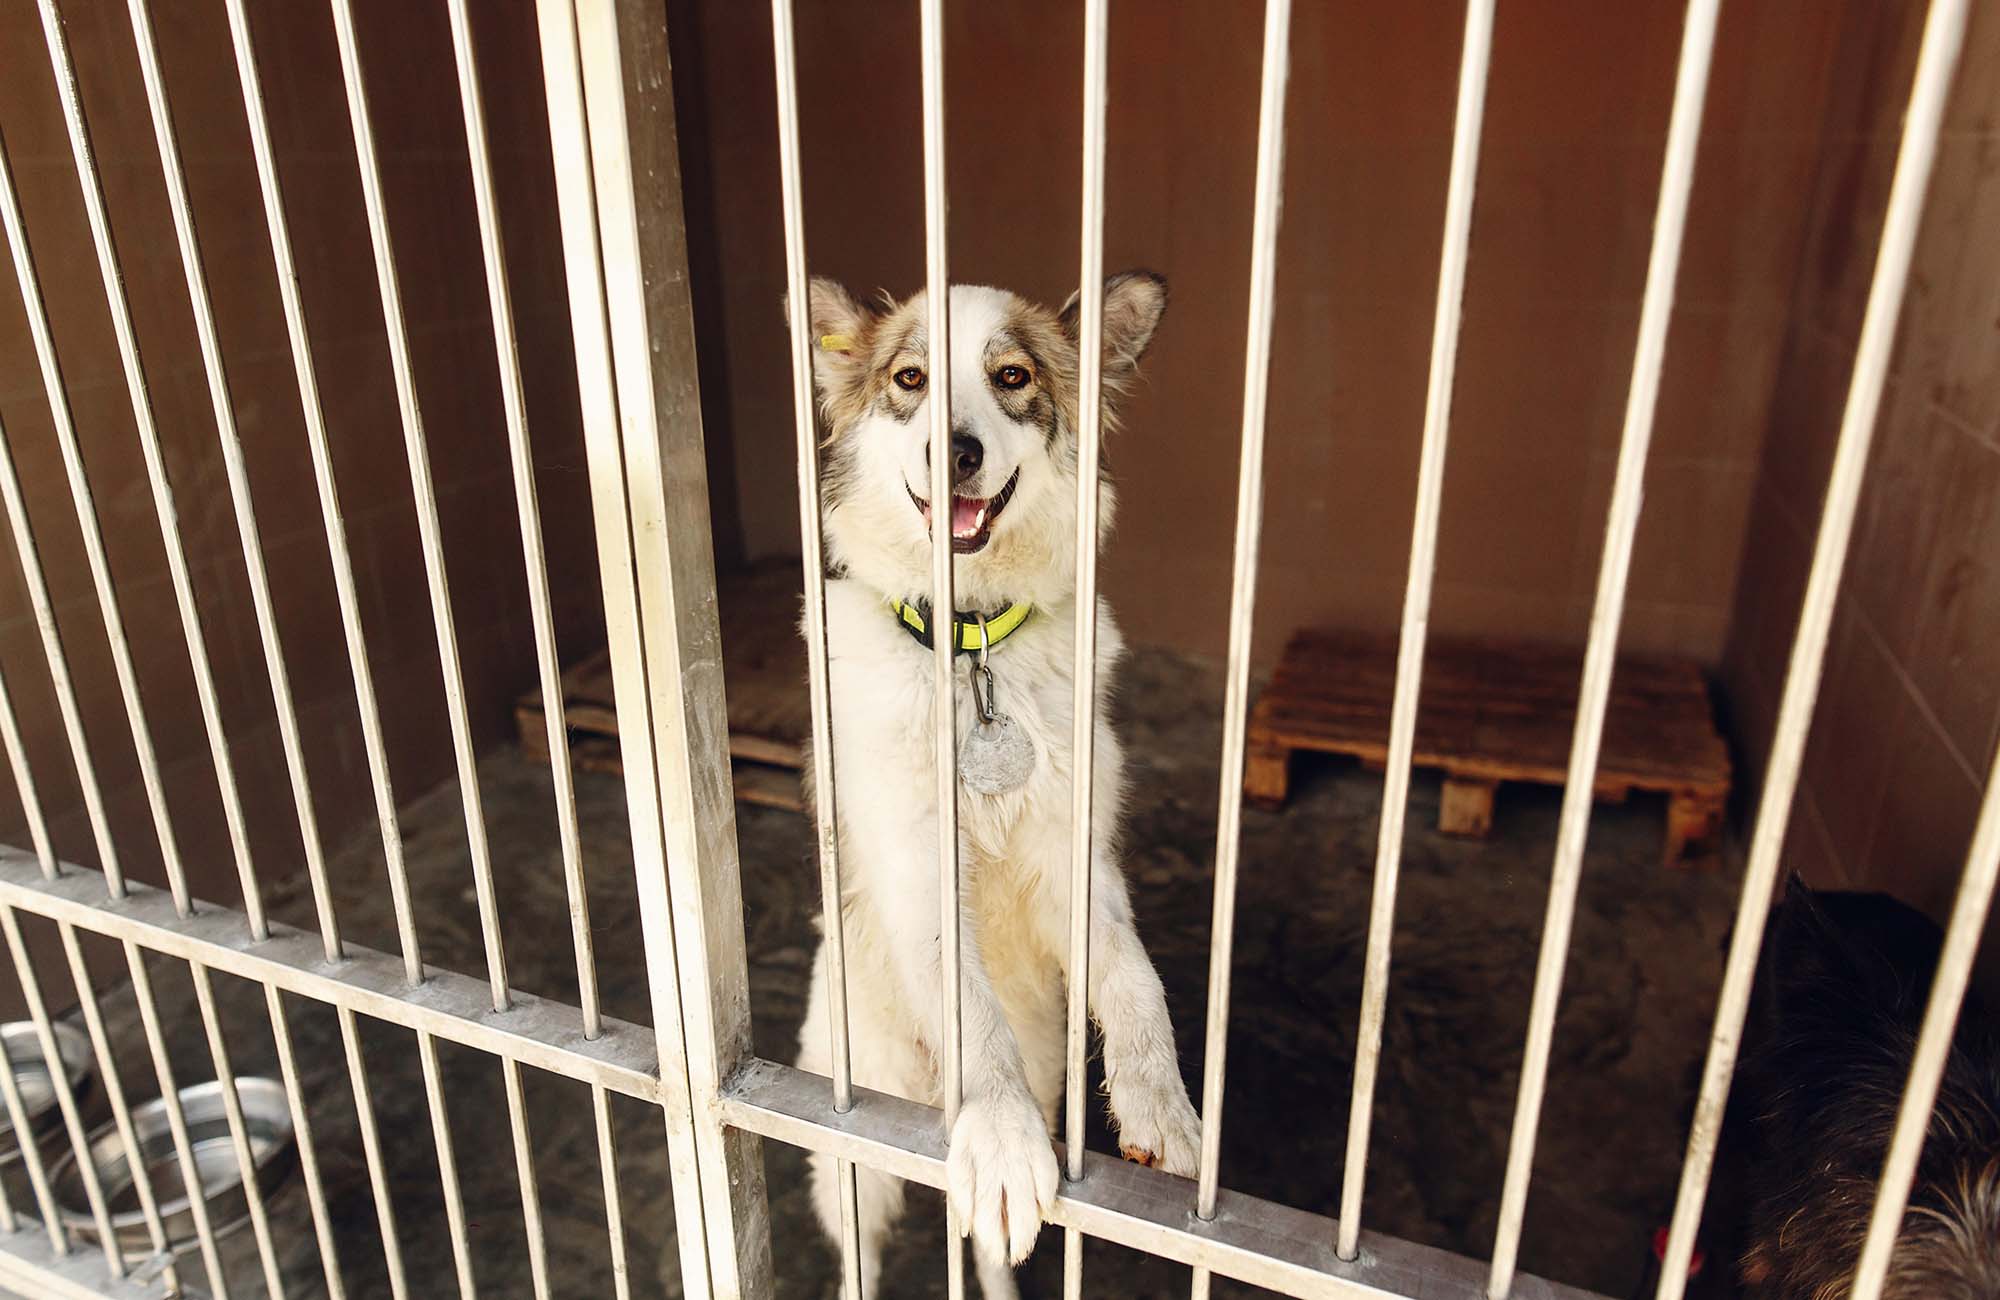 Cute happy dog in a kennel